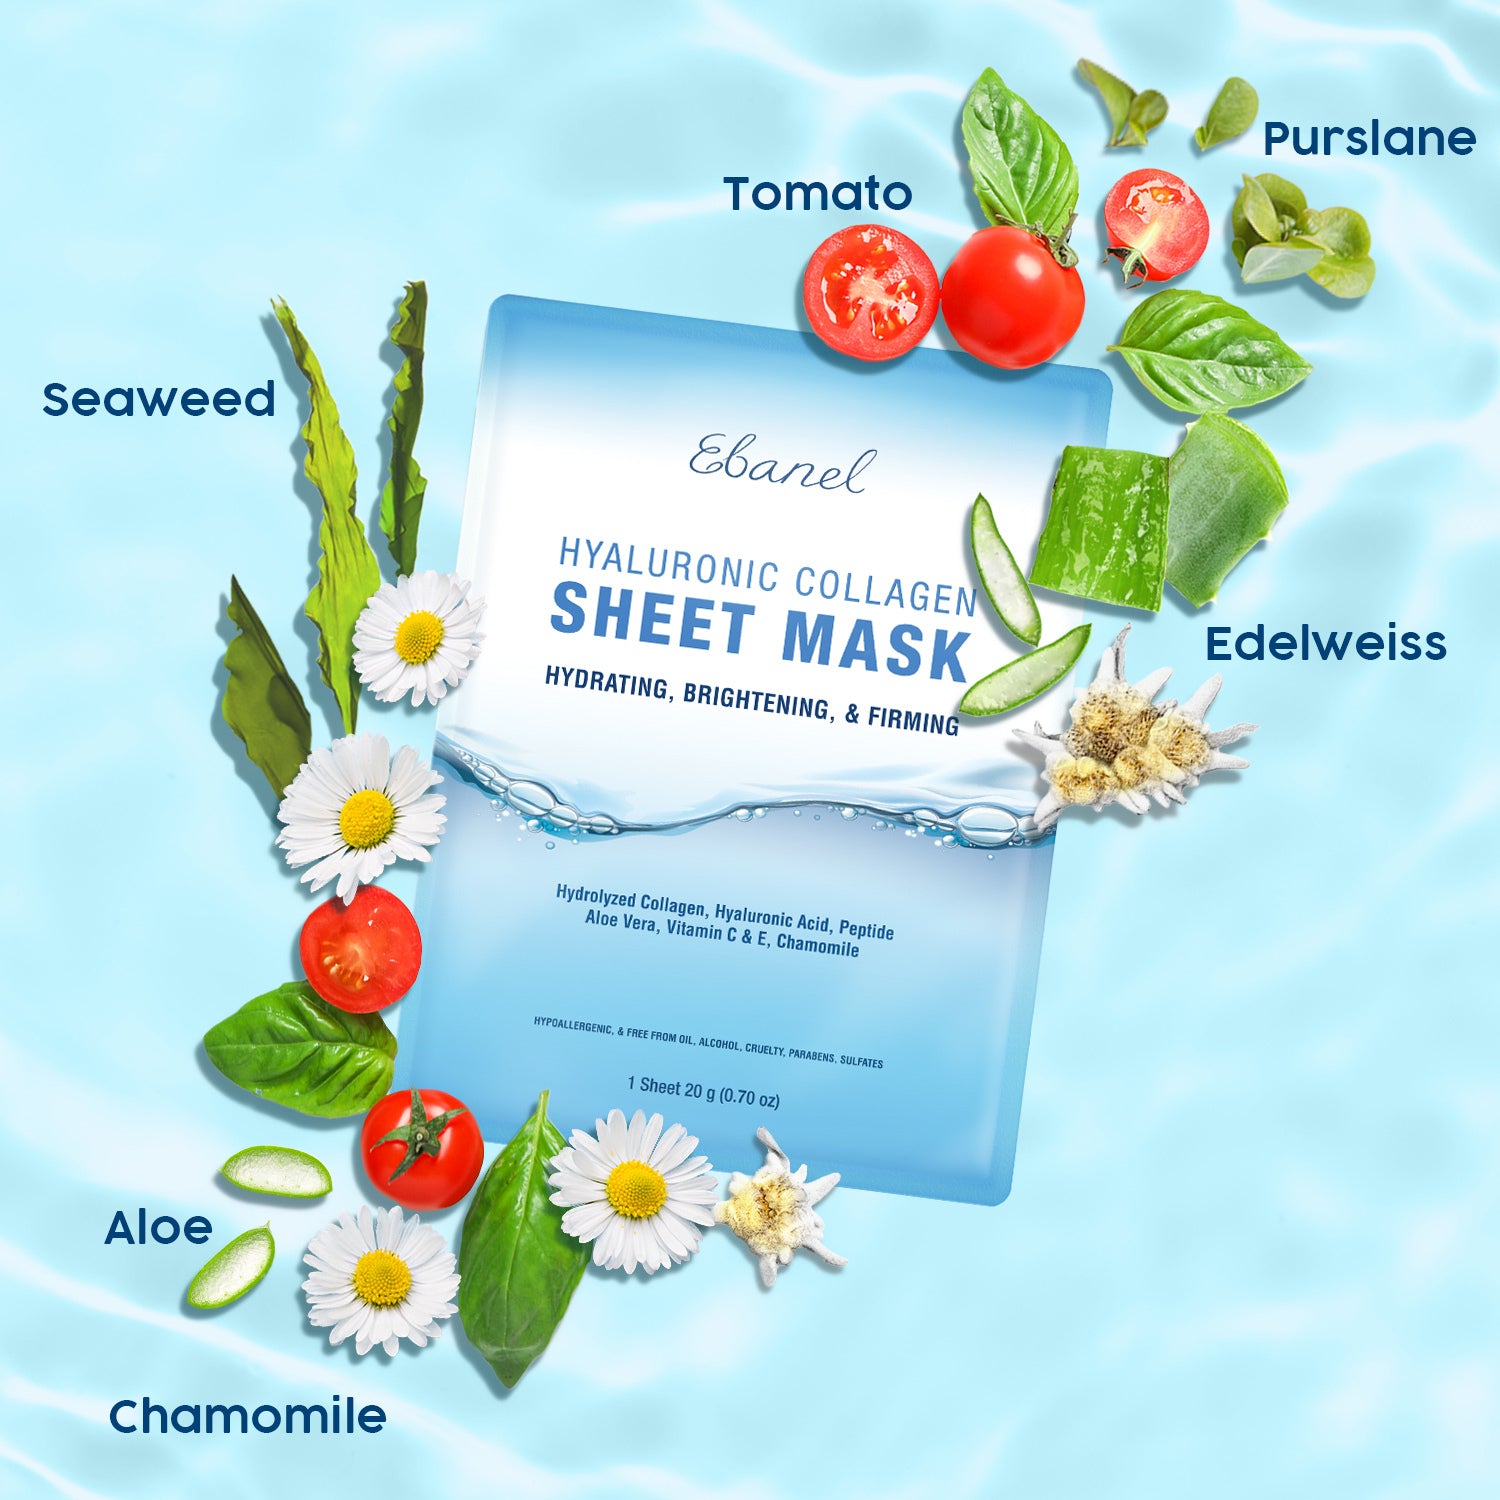 Hyaluronic Collagen Sheet Mask contains: tomato, purslane, seaweed, aloe, chamomile., edelweiss.